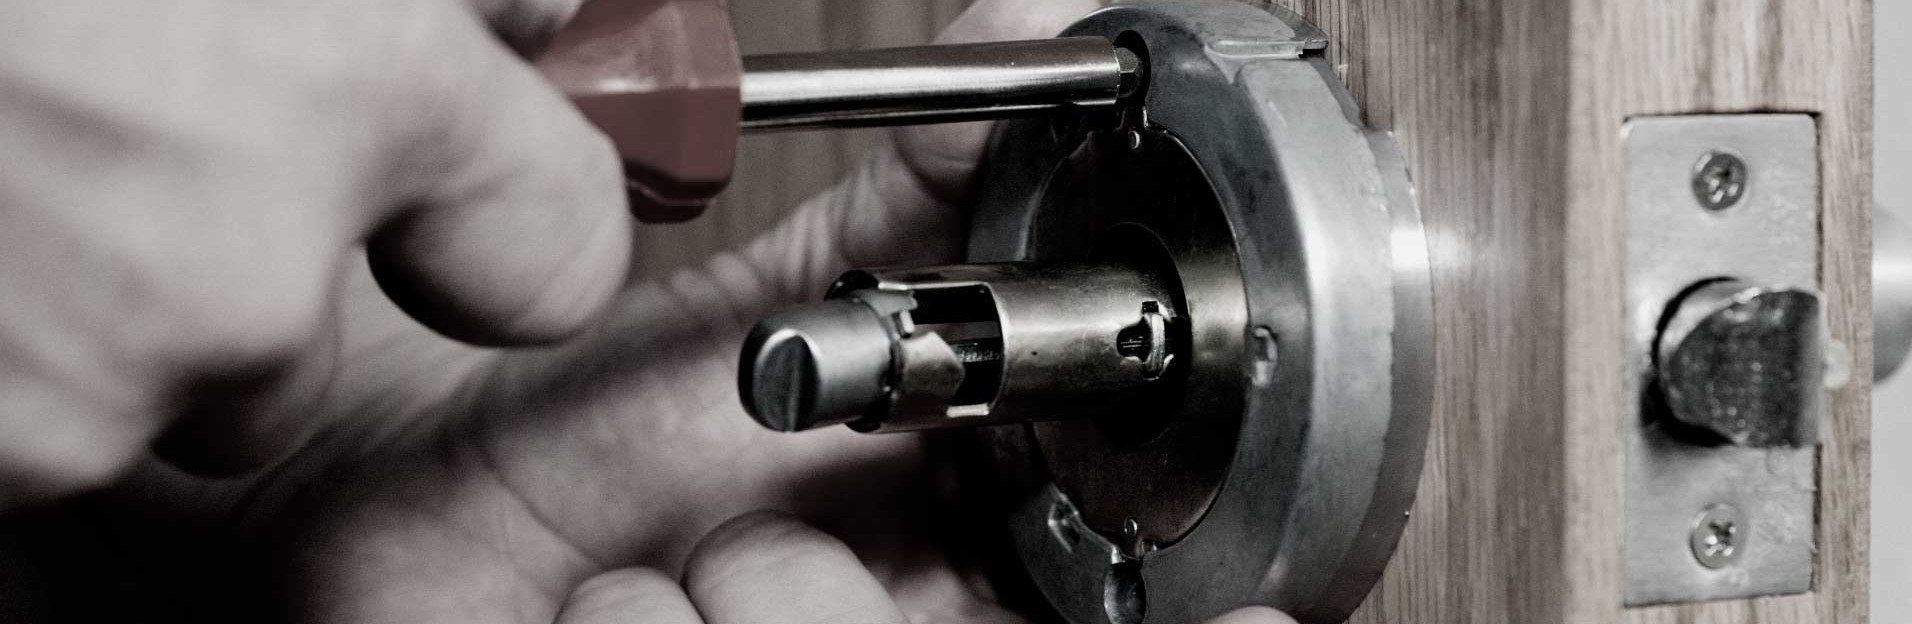 cerrajeros perturas hori - Locksmith Burgos Repair Change Locks Opening Door